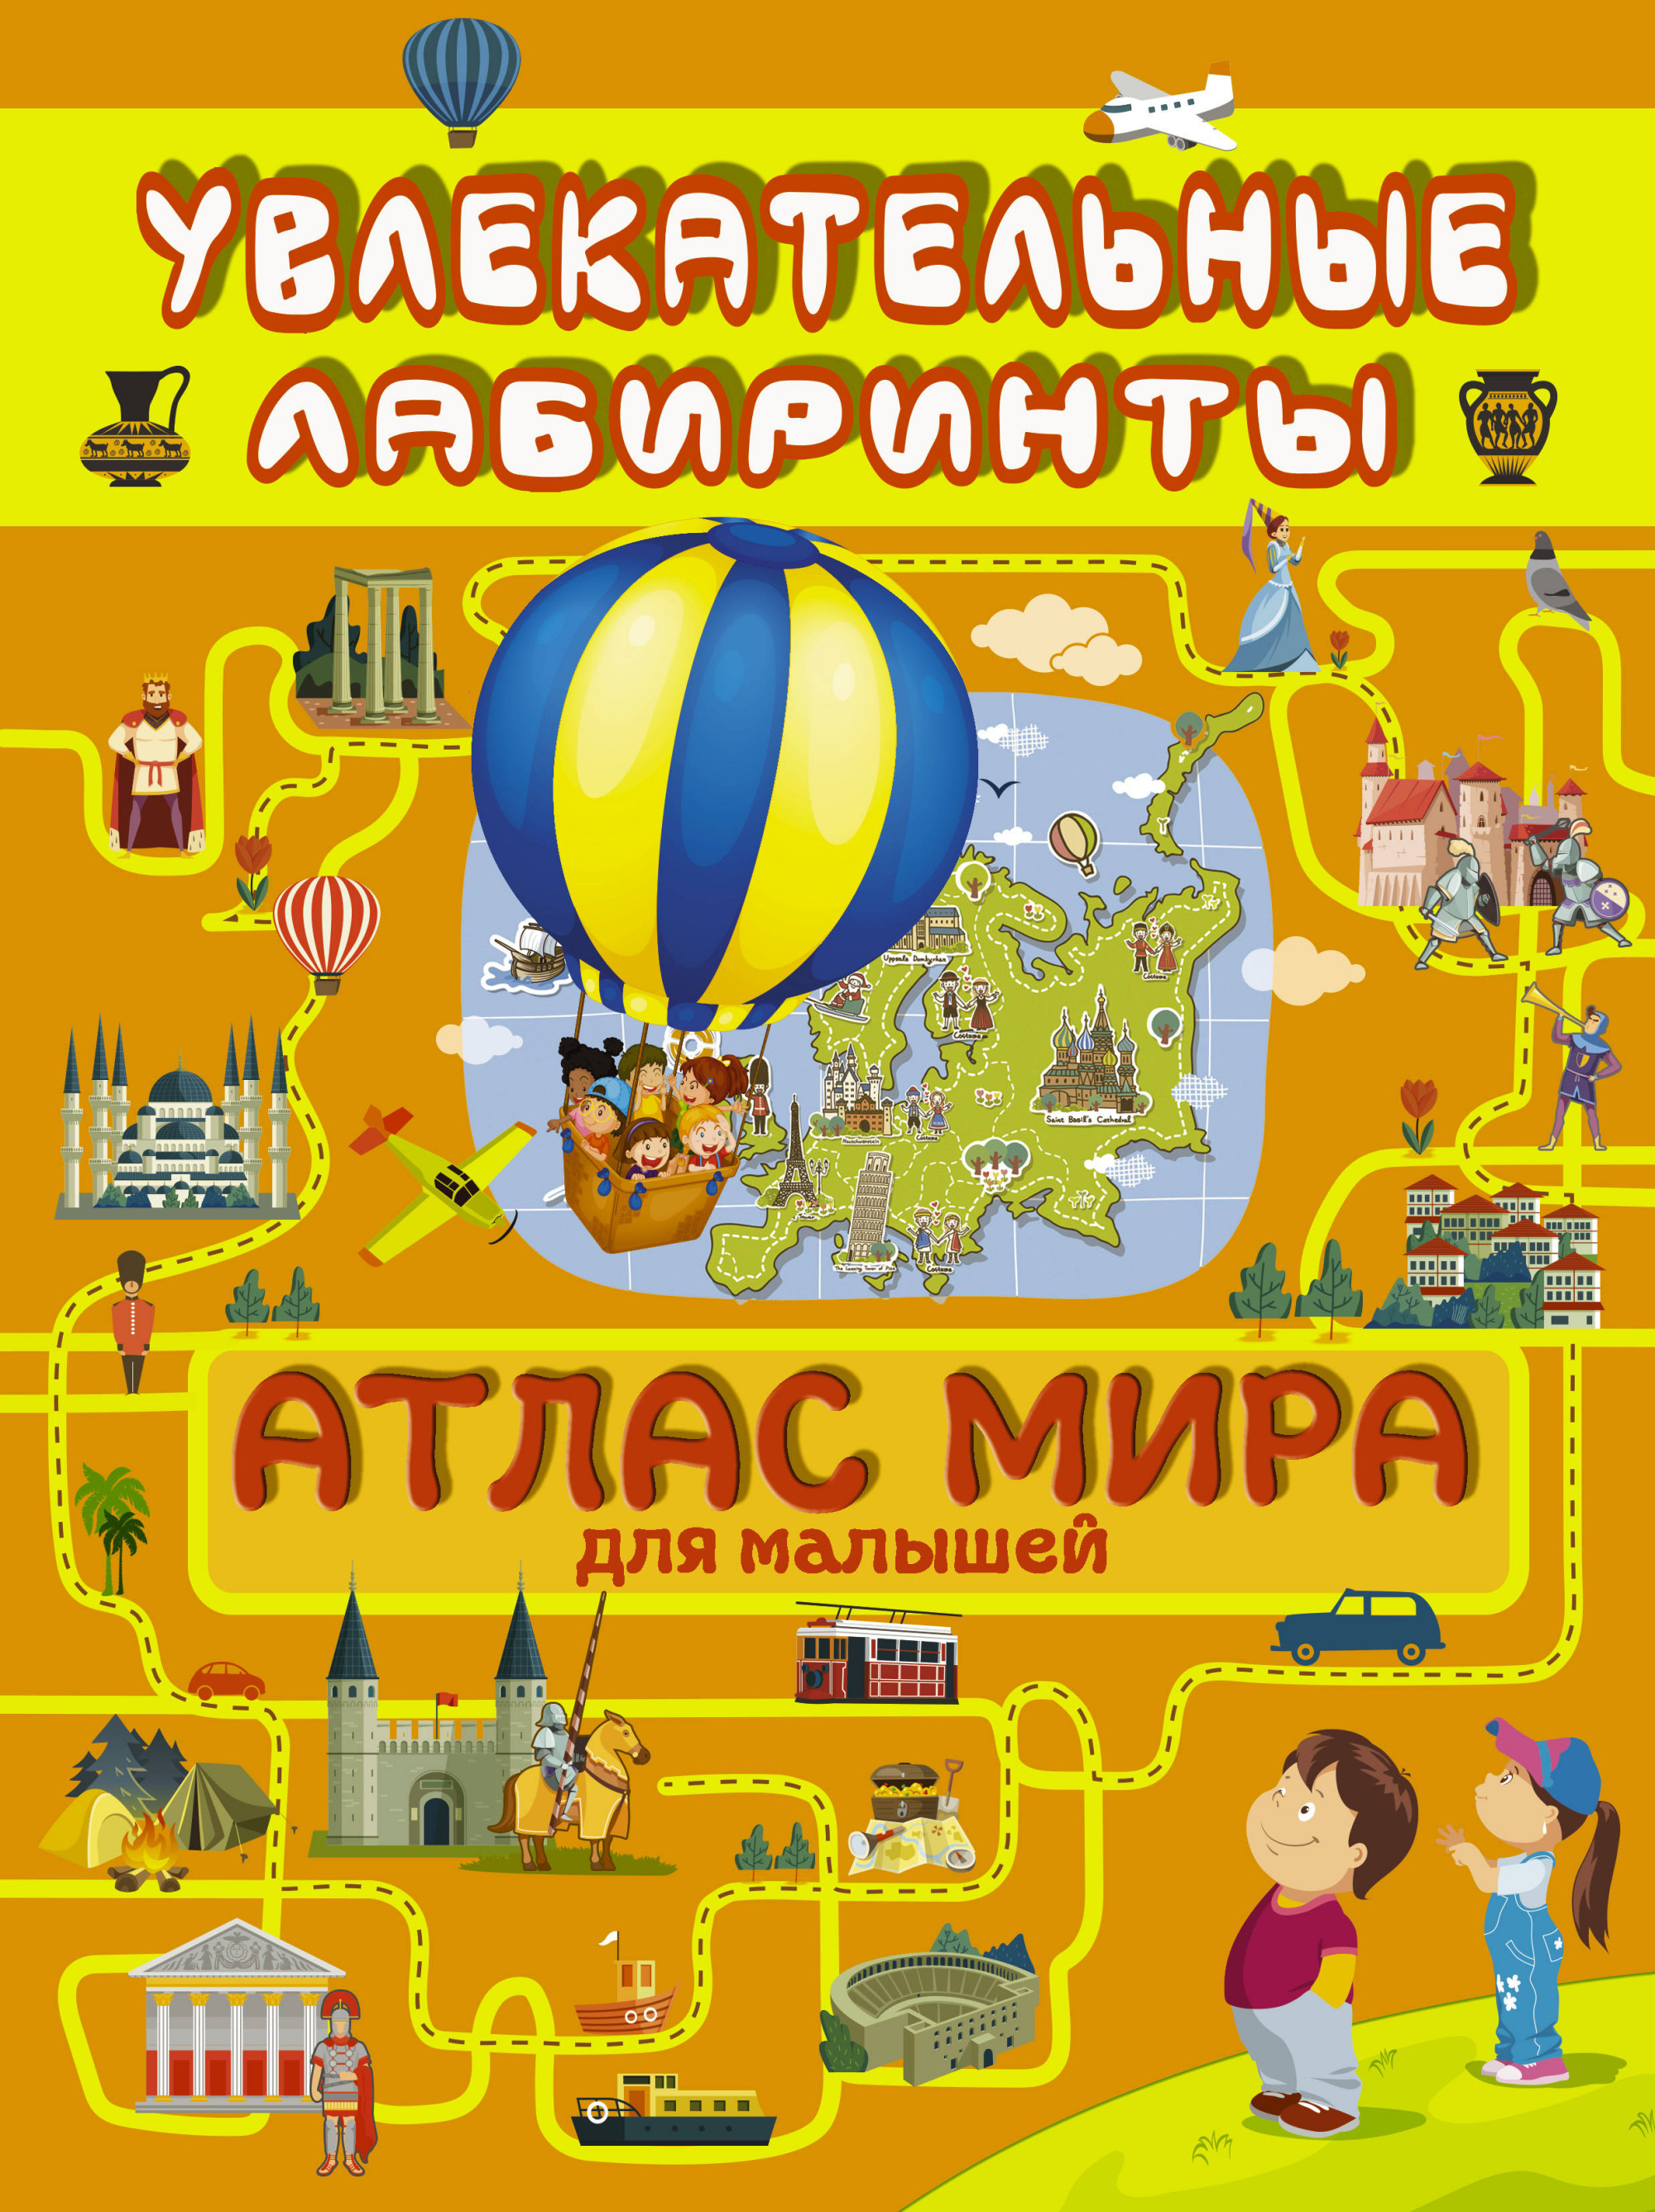 фото Книга атлас мира для малышей третьякова а. и. аст